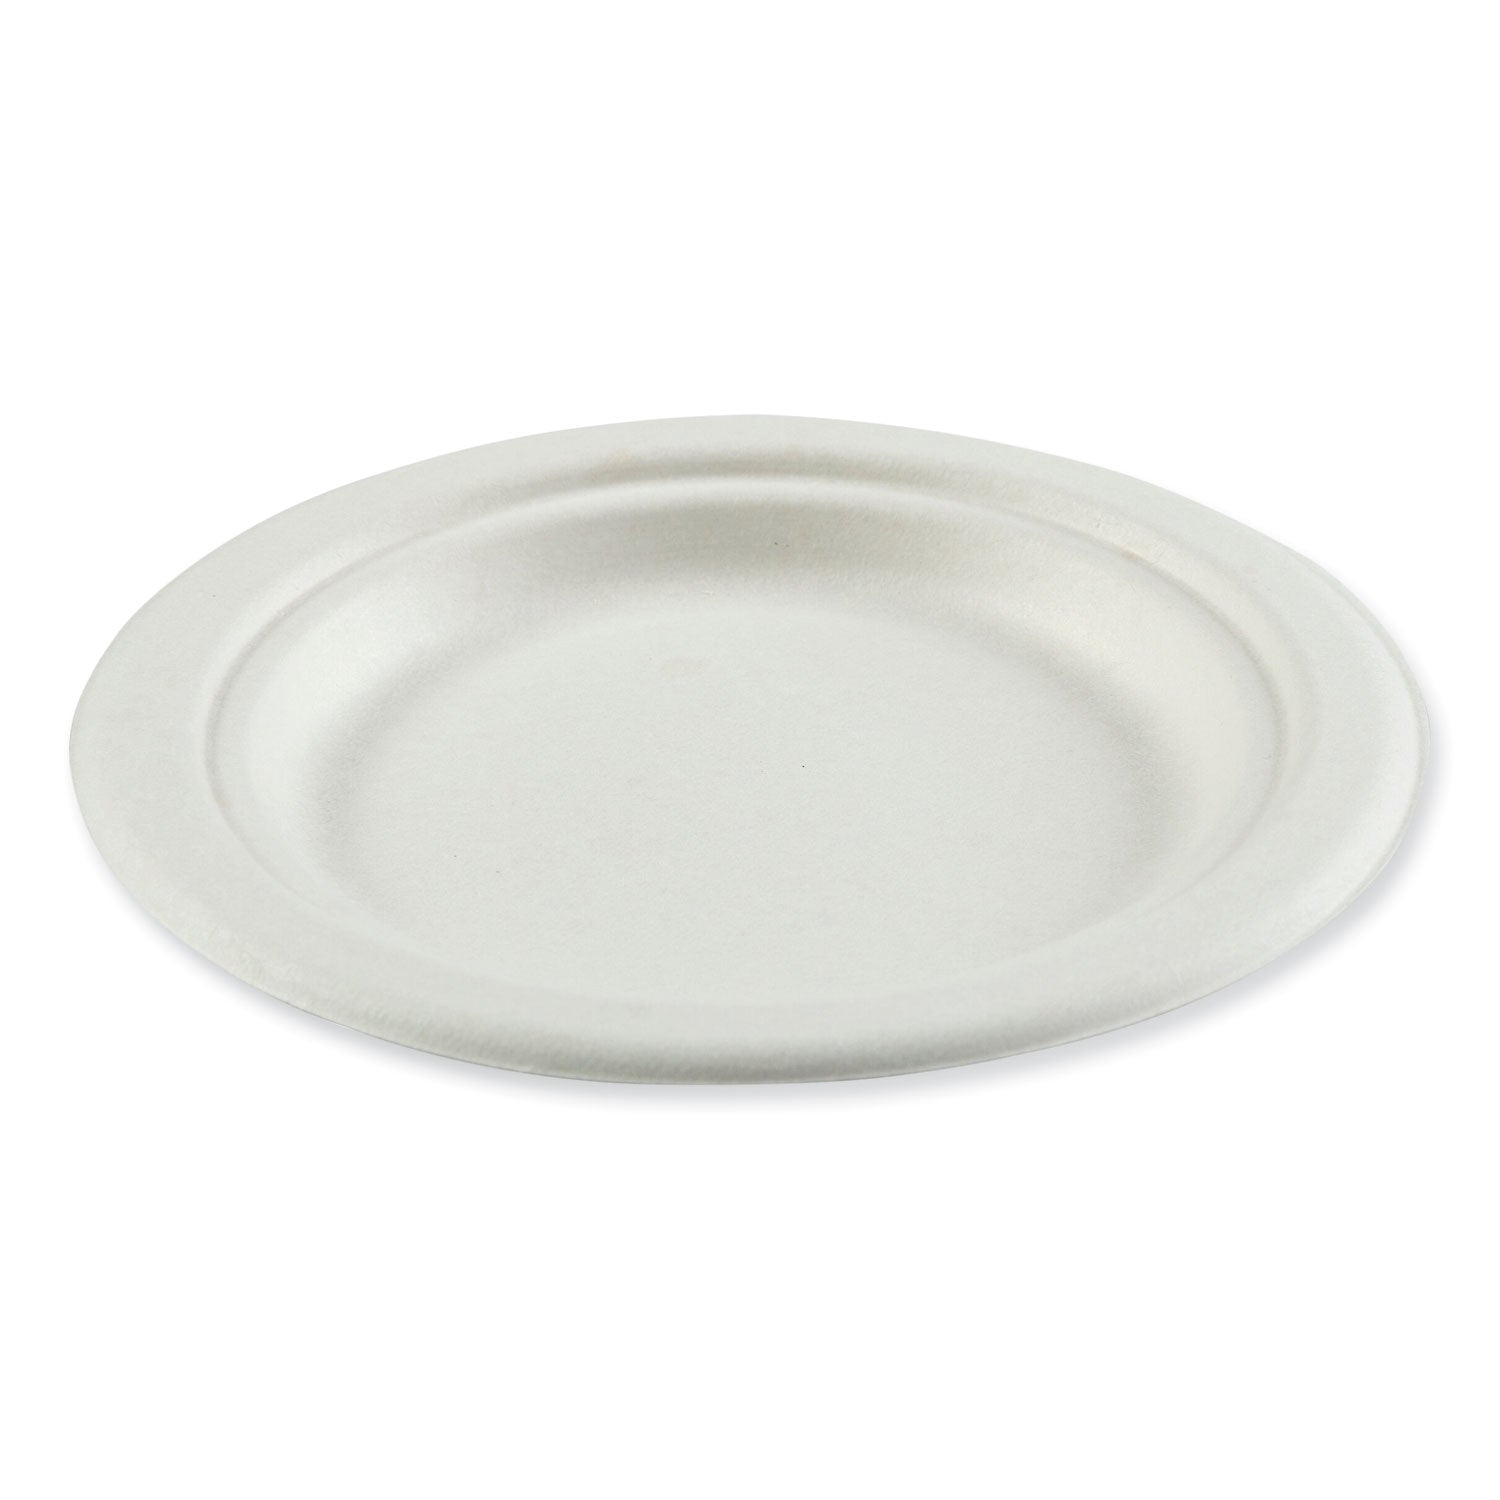 bagasse-pfas-free-dinnerware-plate-6-white-1000-carton_rpppl06npfas - 1